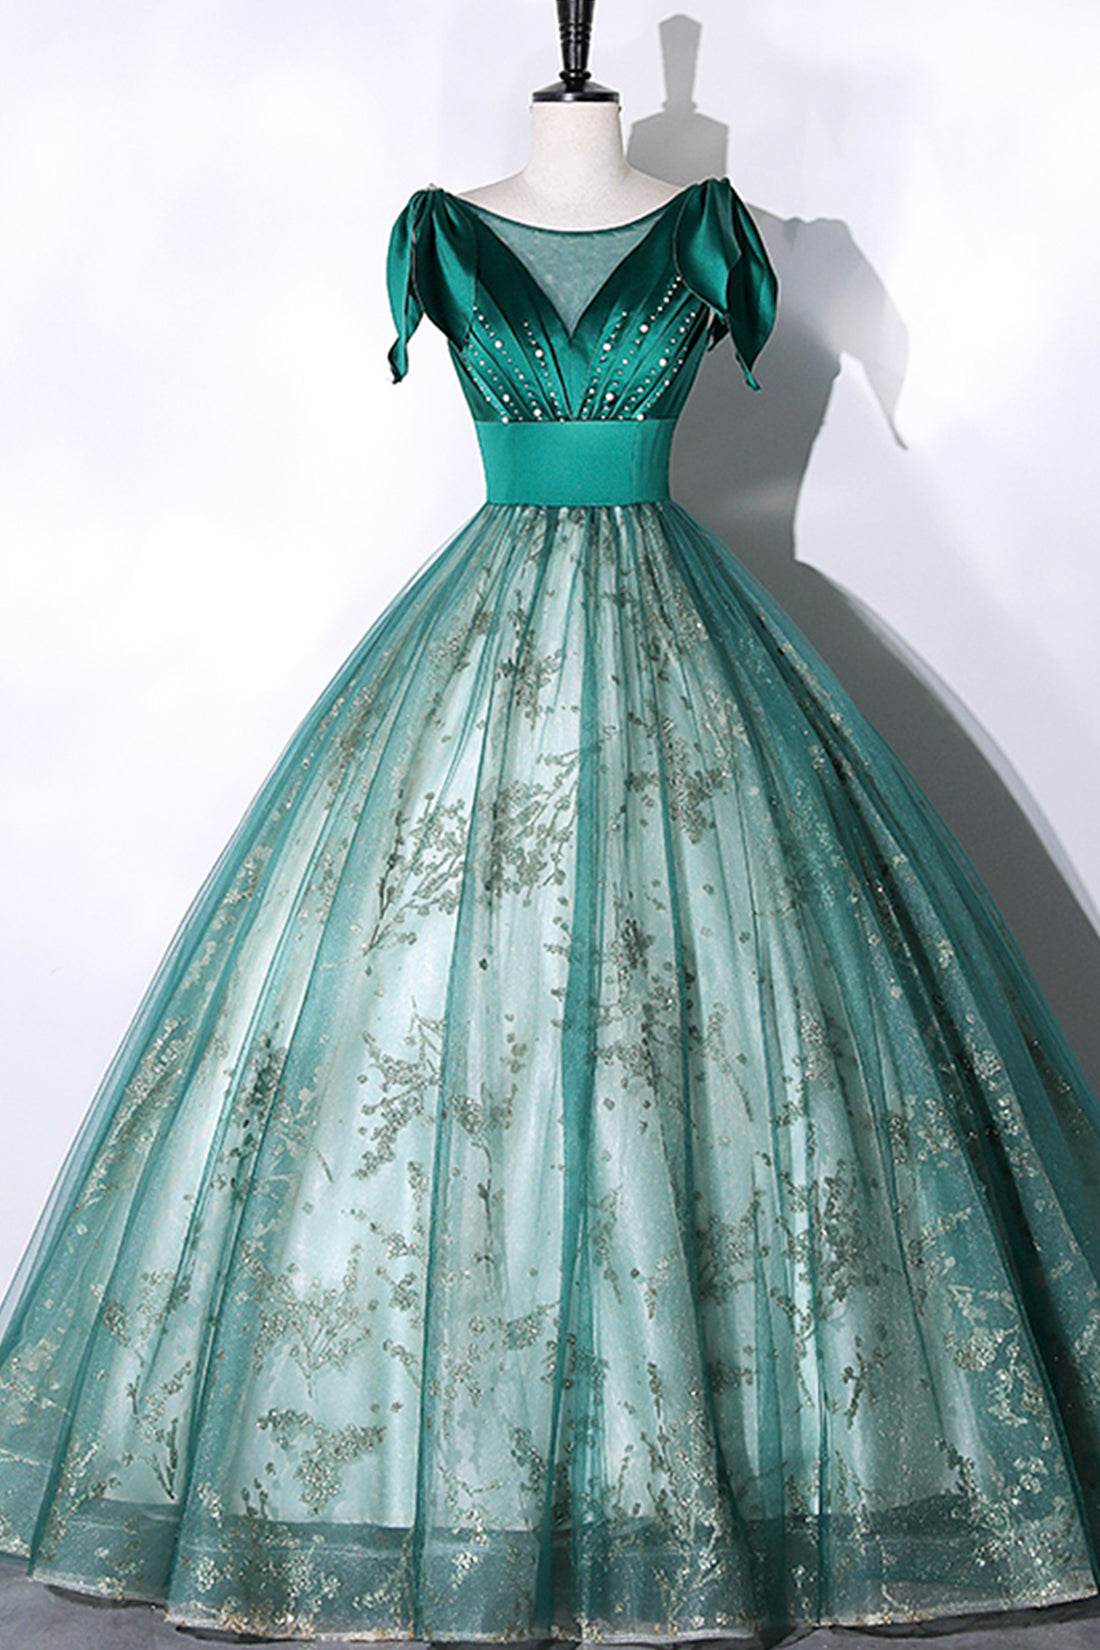 Green Satin Tulle Long Corset Prom Dress, Elegant A-Line Corset Formal Dress outfit, Bridesmaids Dress Convertible